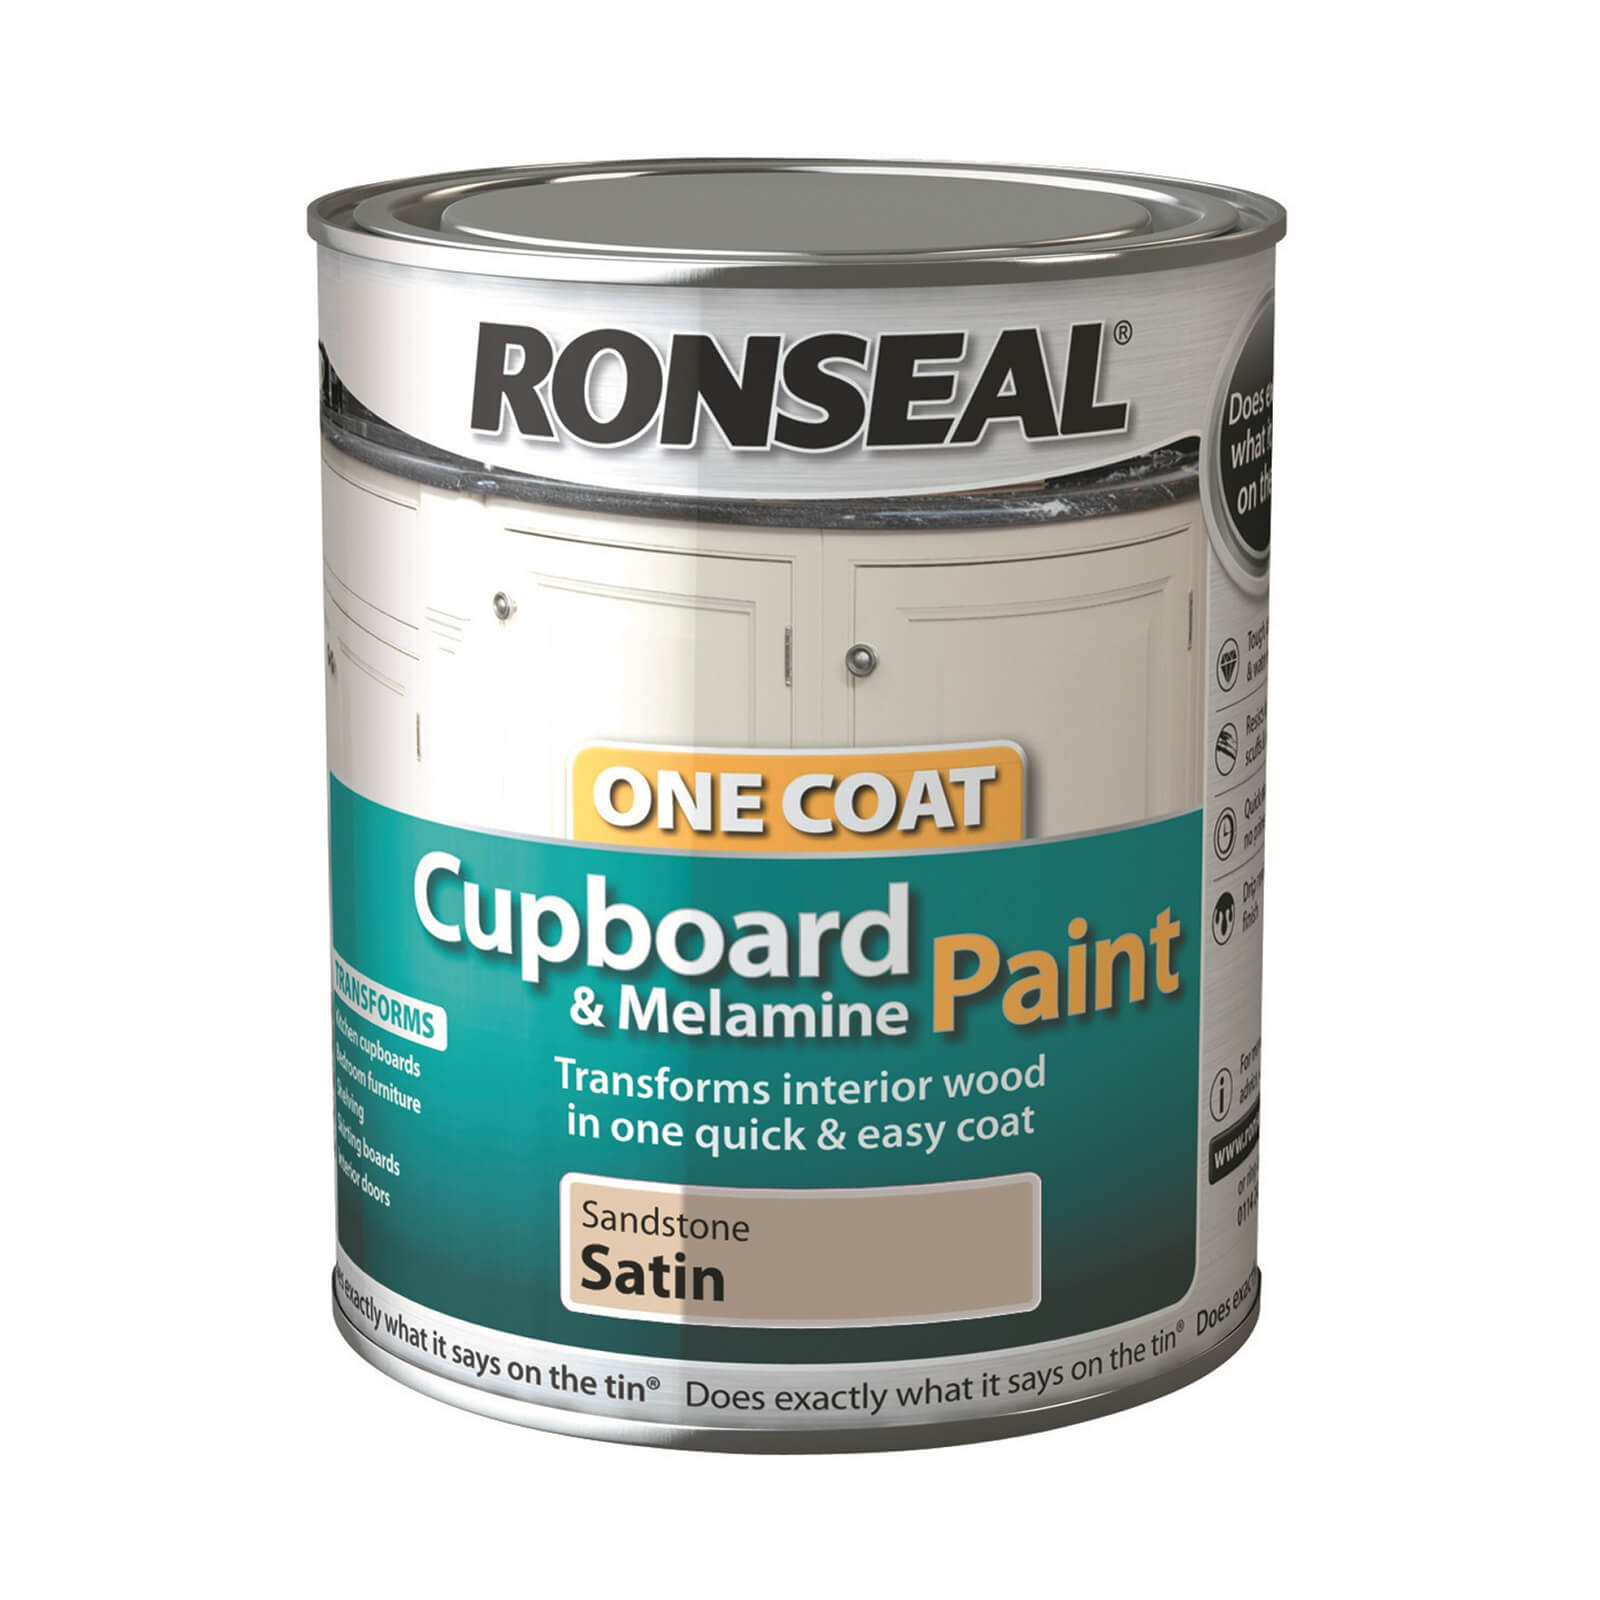 Ronseal One Coat Cupboard Melamine & MDF Paint Sandstone Satin 750ml